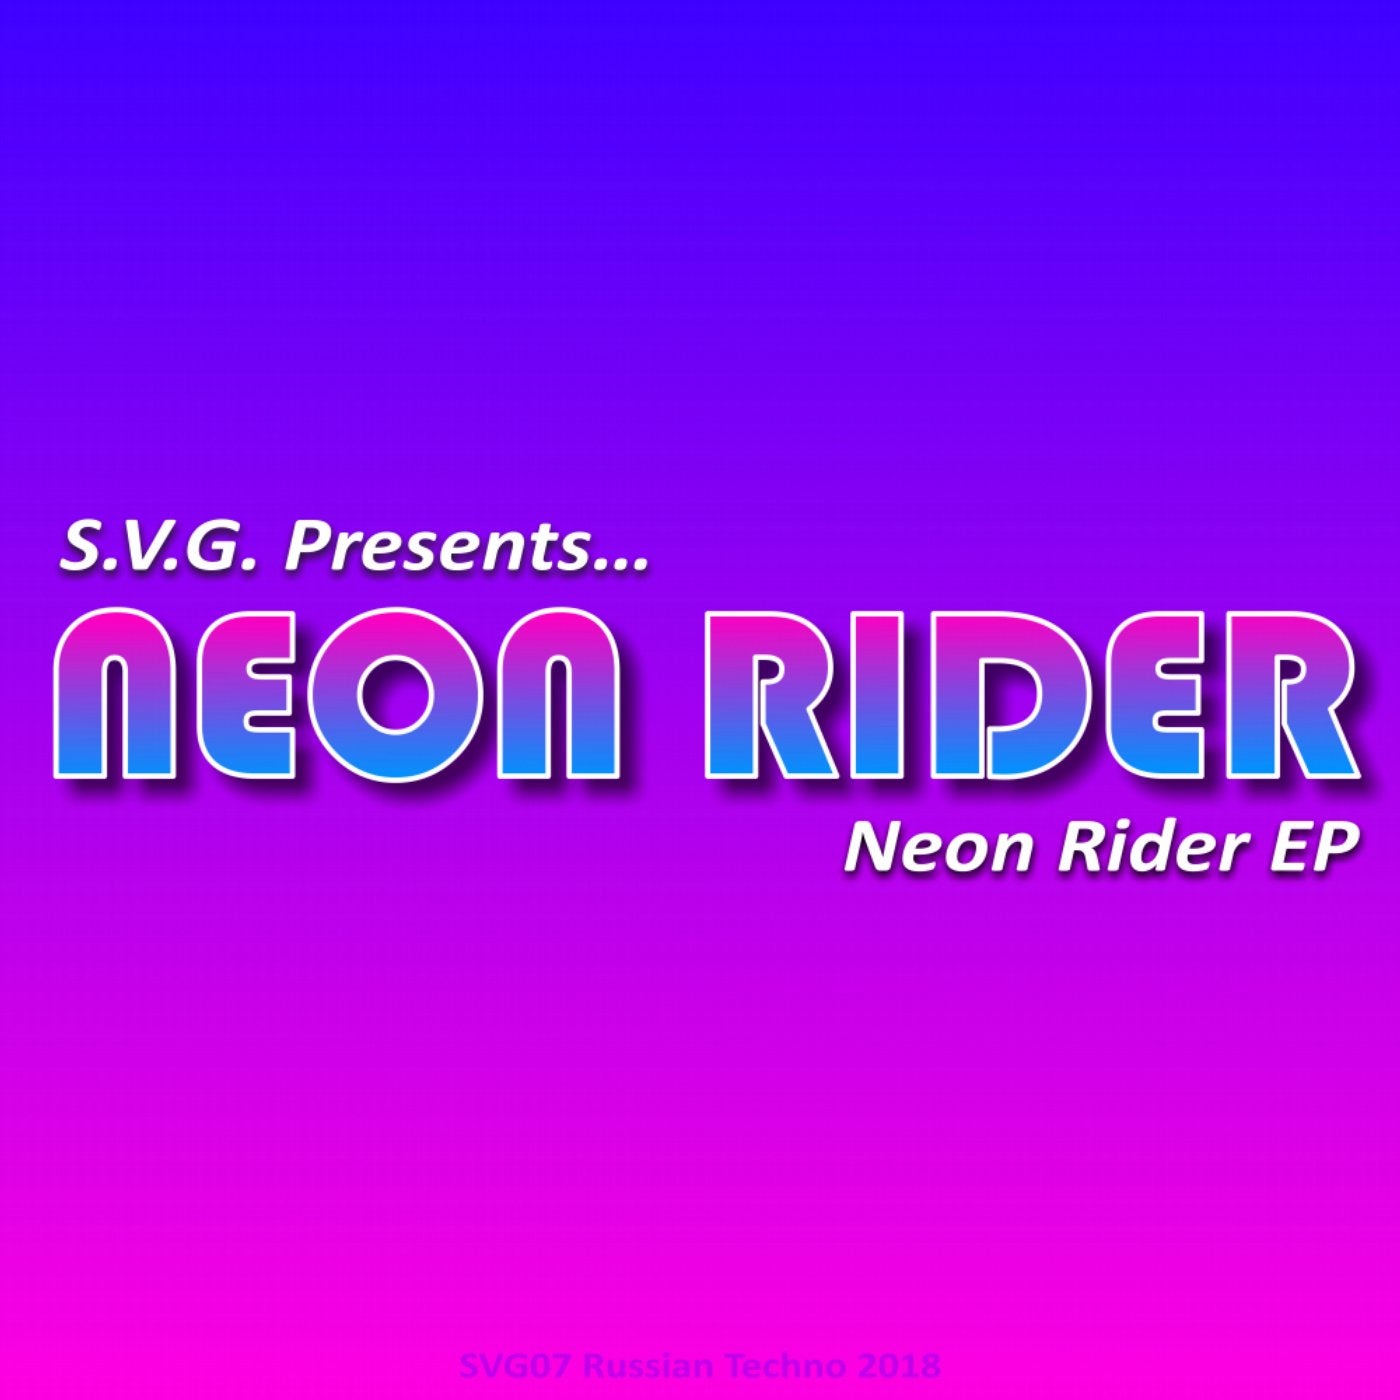 Neon Rider EP